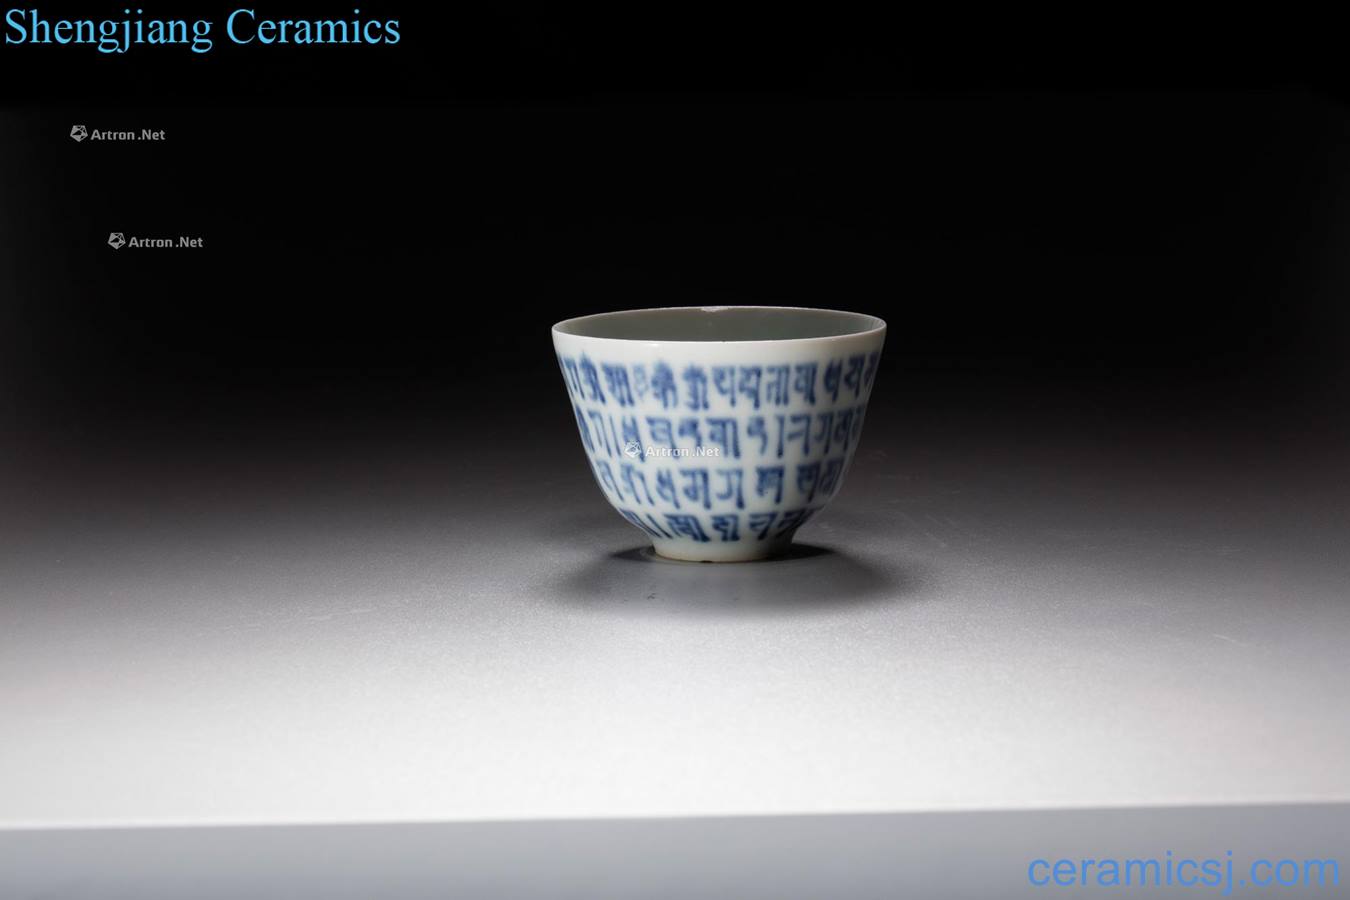 Qing dynasty or earlier Sanskrit glass